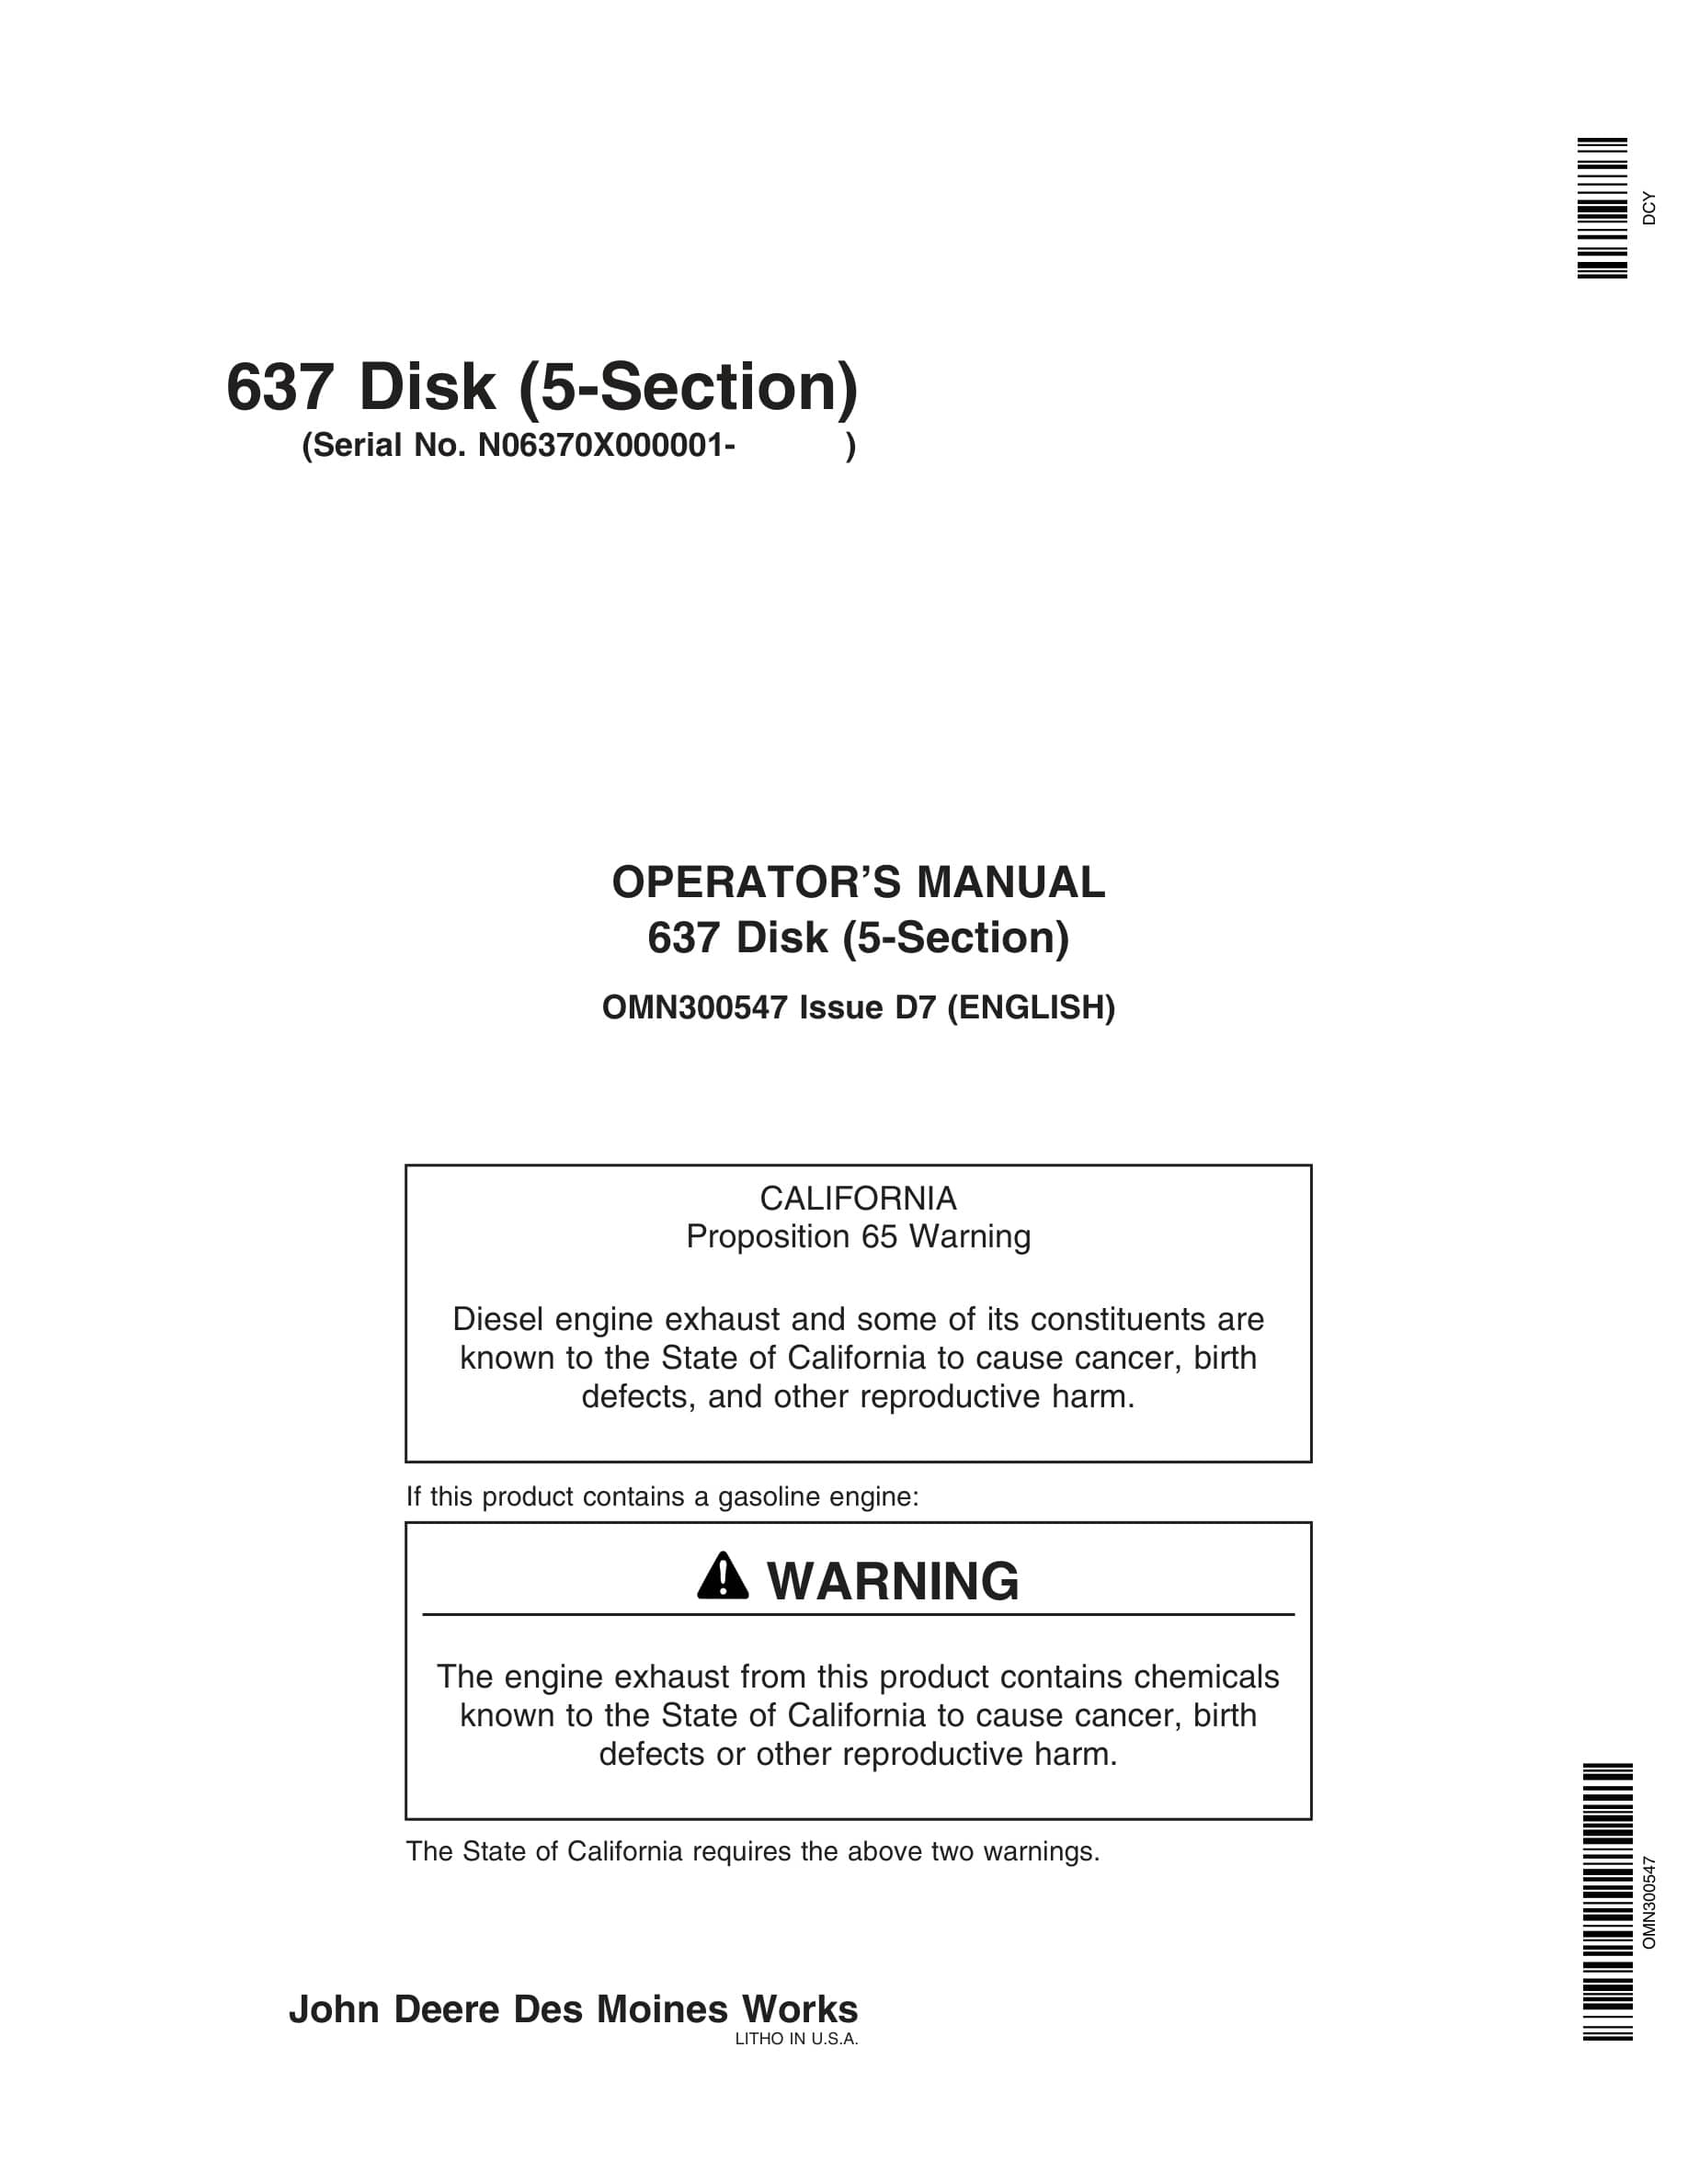 John Deere 637 Disk (5-Section) Operator Manual OMN300547-1